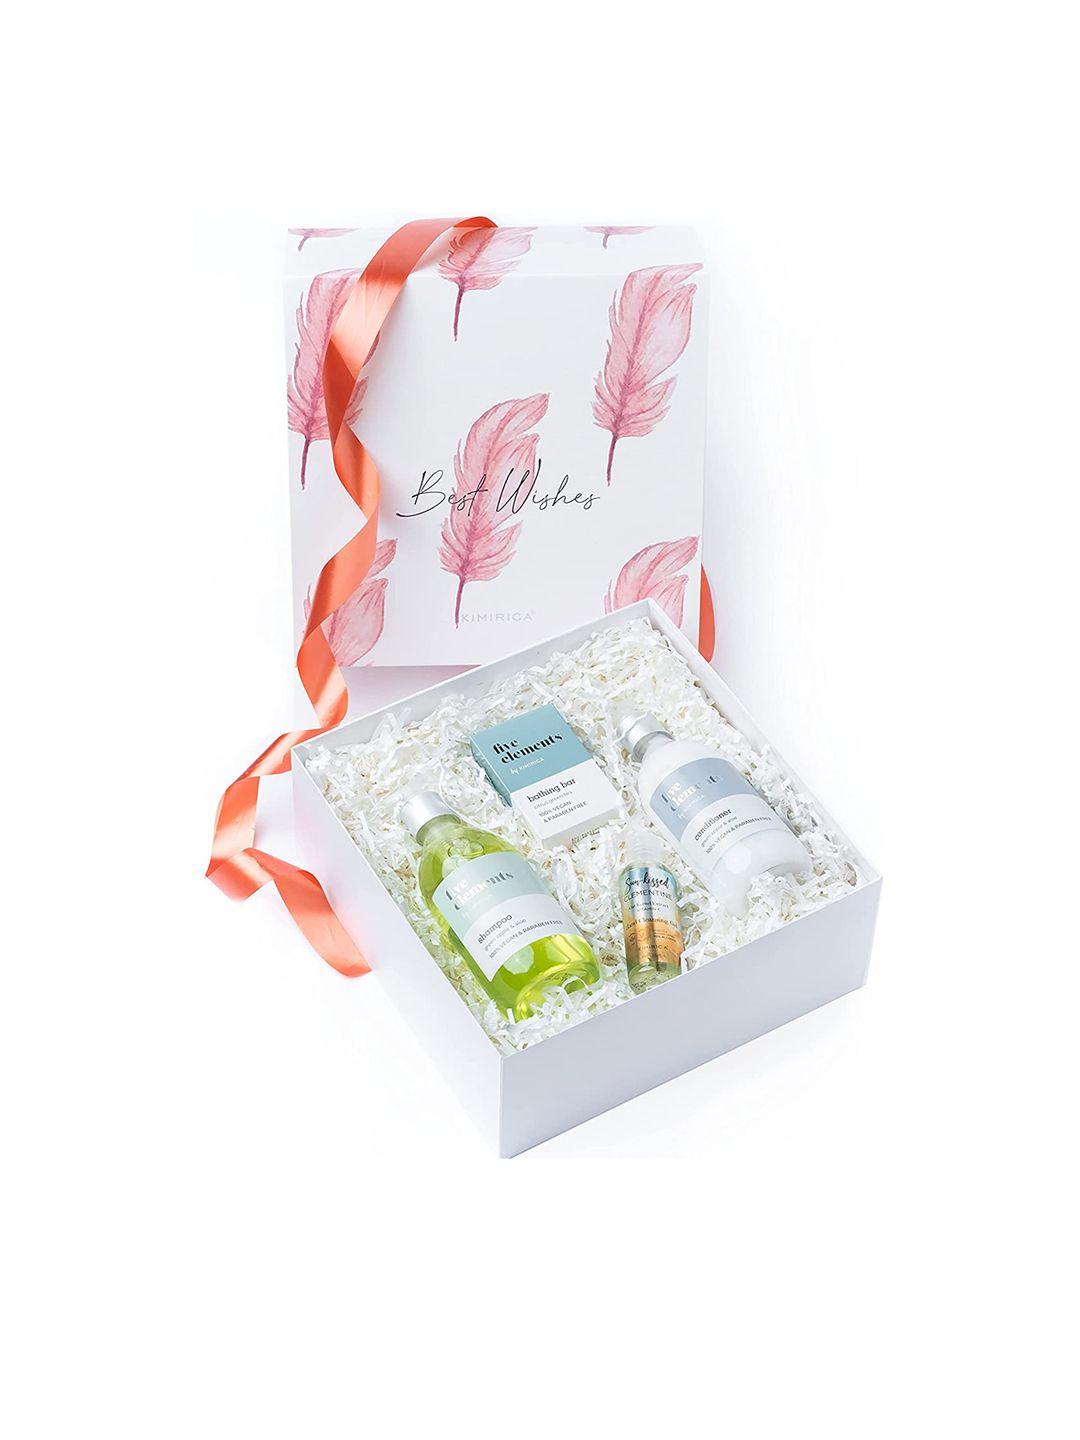 kimirica feel your best gift box - body lotion +  shower gel + hand sanitizer + soap